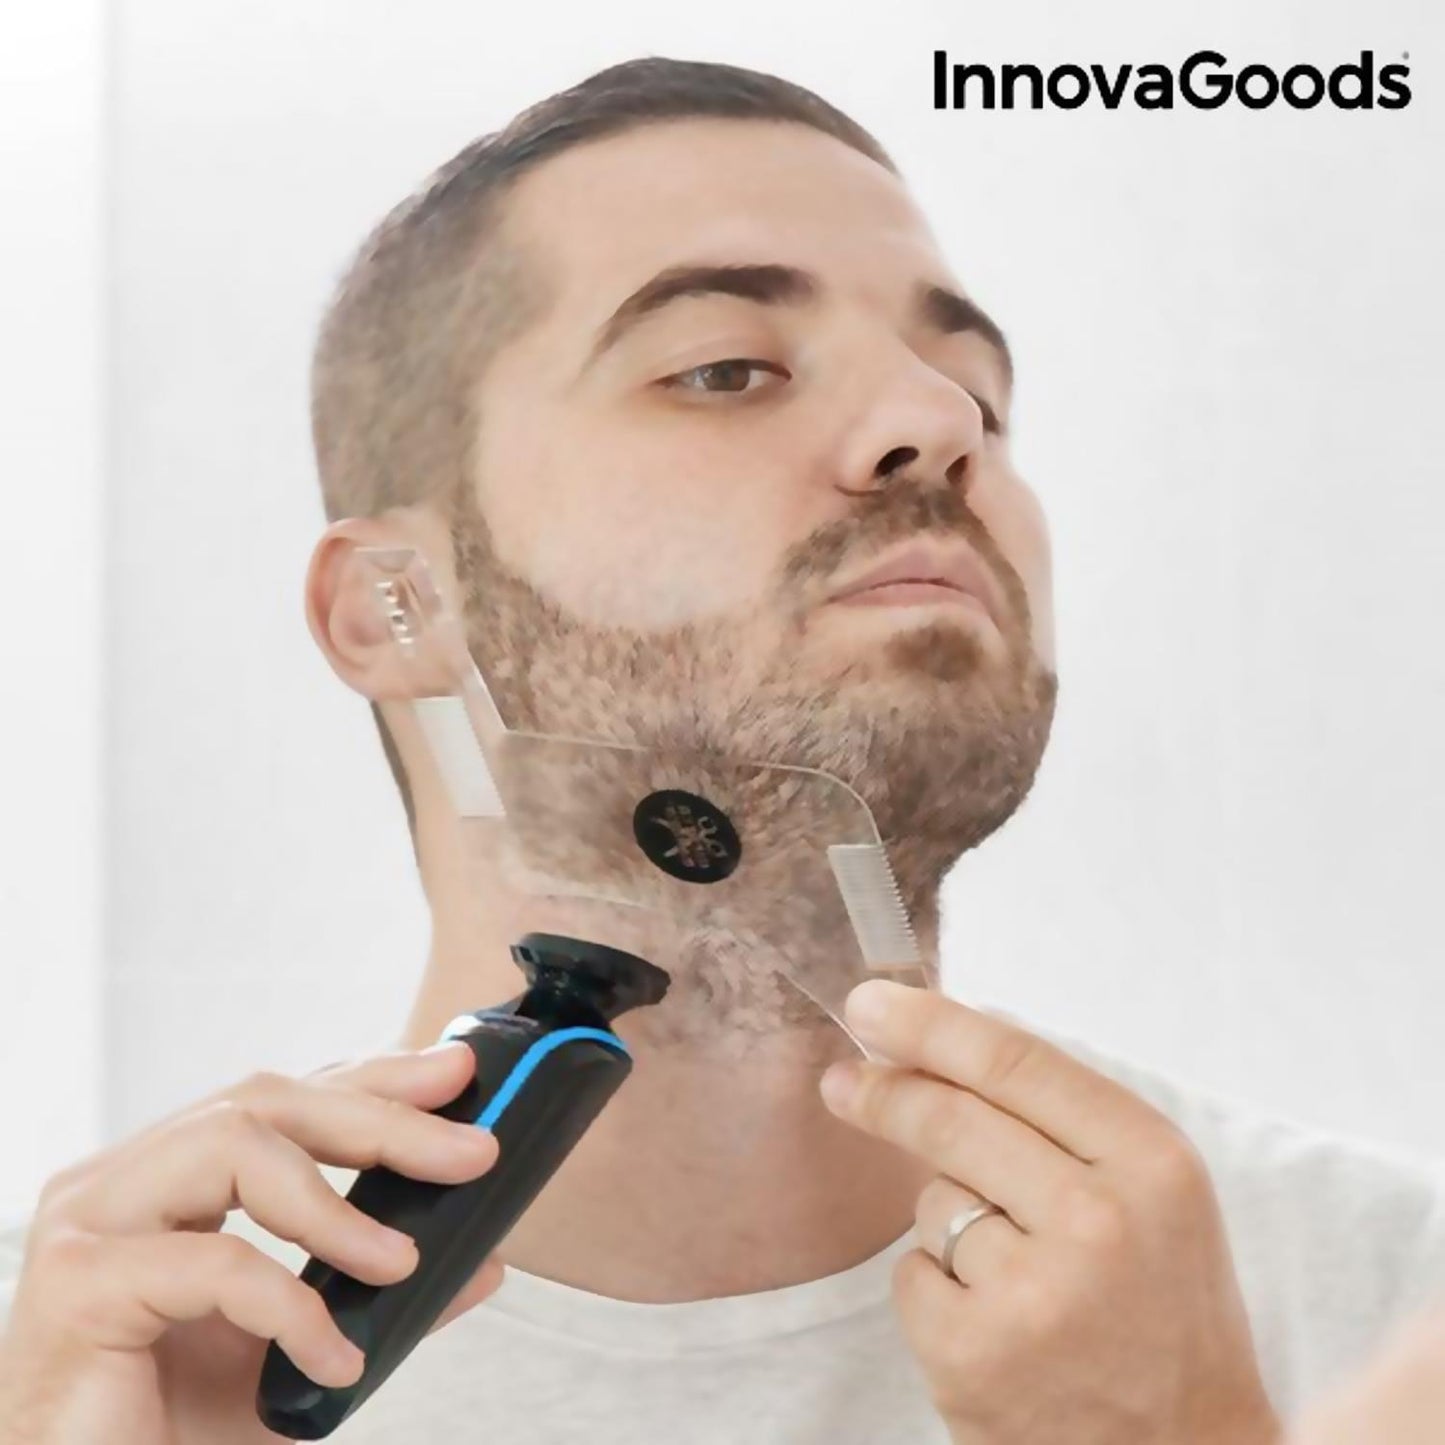 Men'S Beard Styling Comb And Shaper